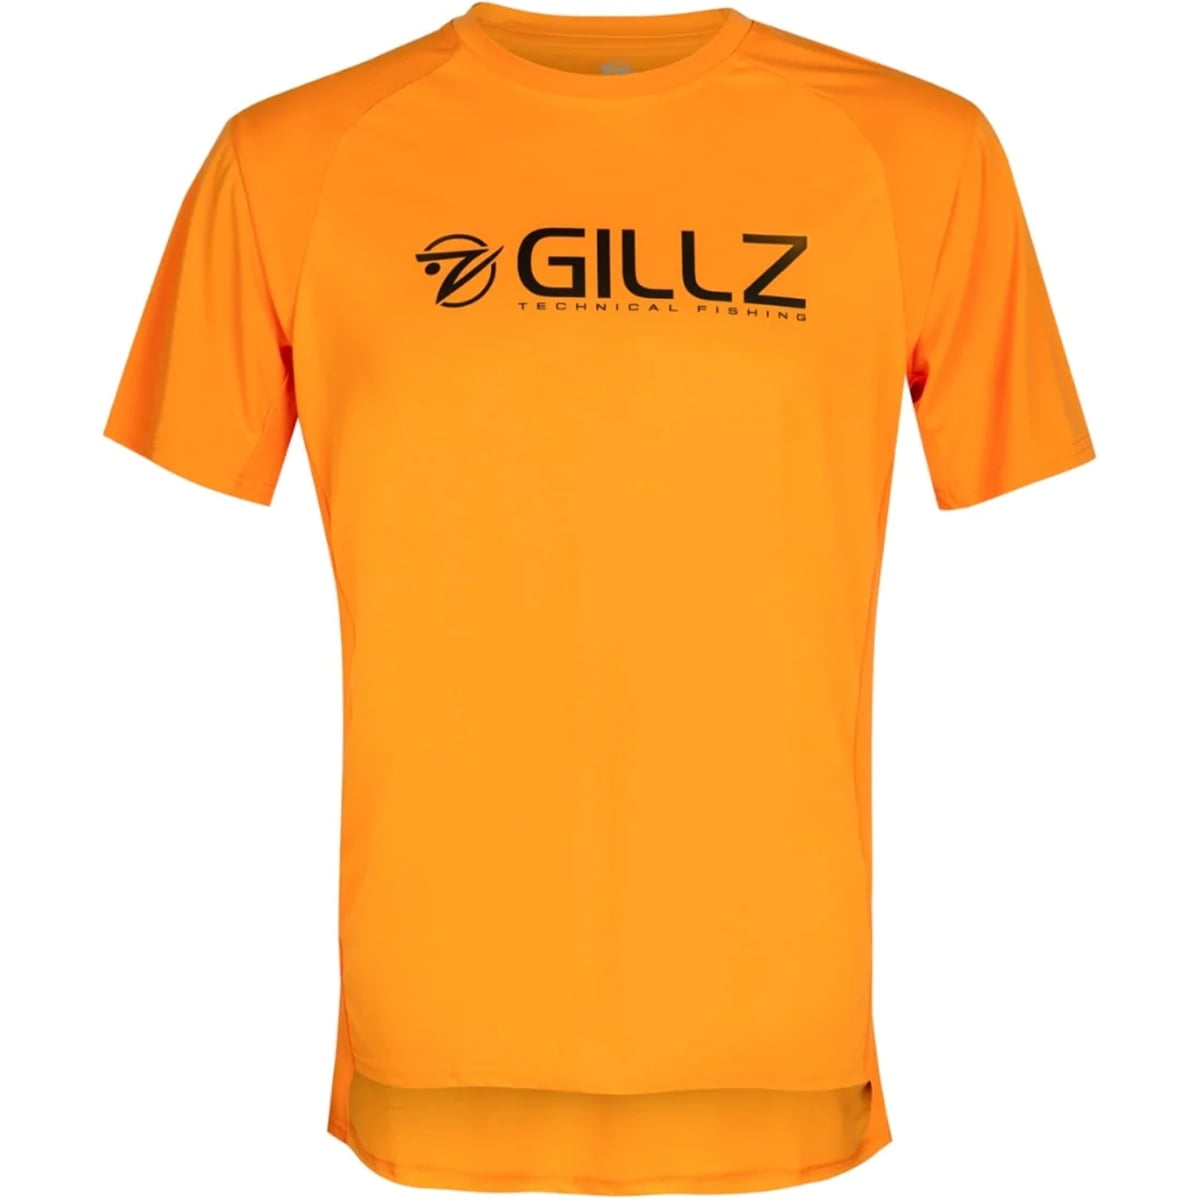 Gillz Pro Series UV T-Shirt - Small - Sun Orange 